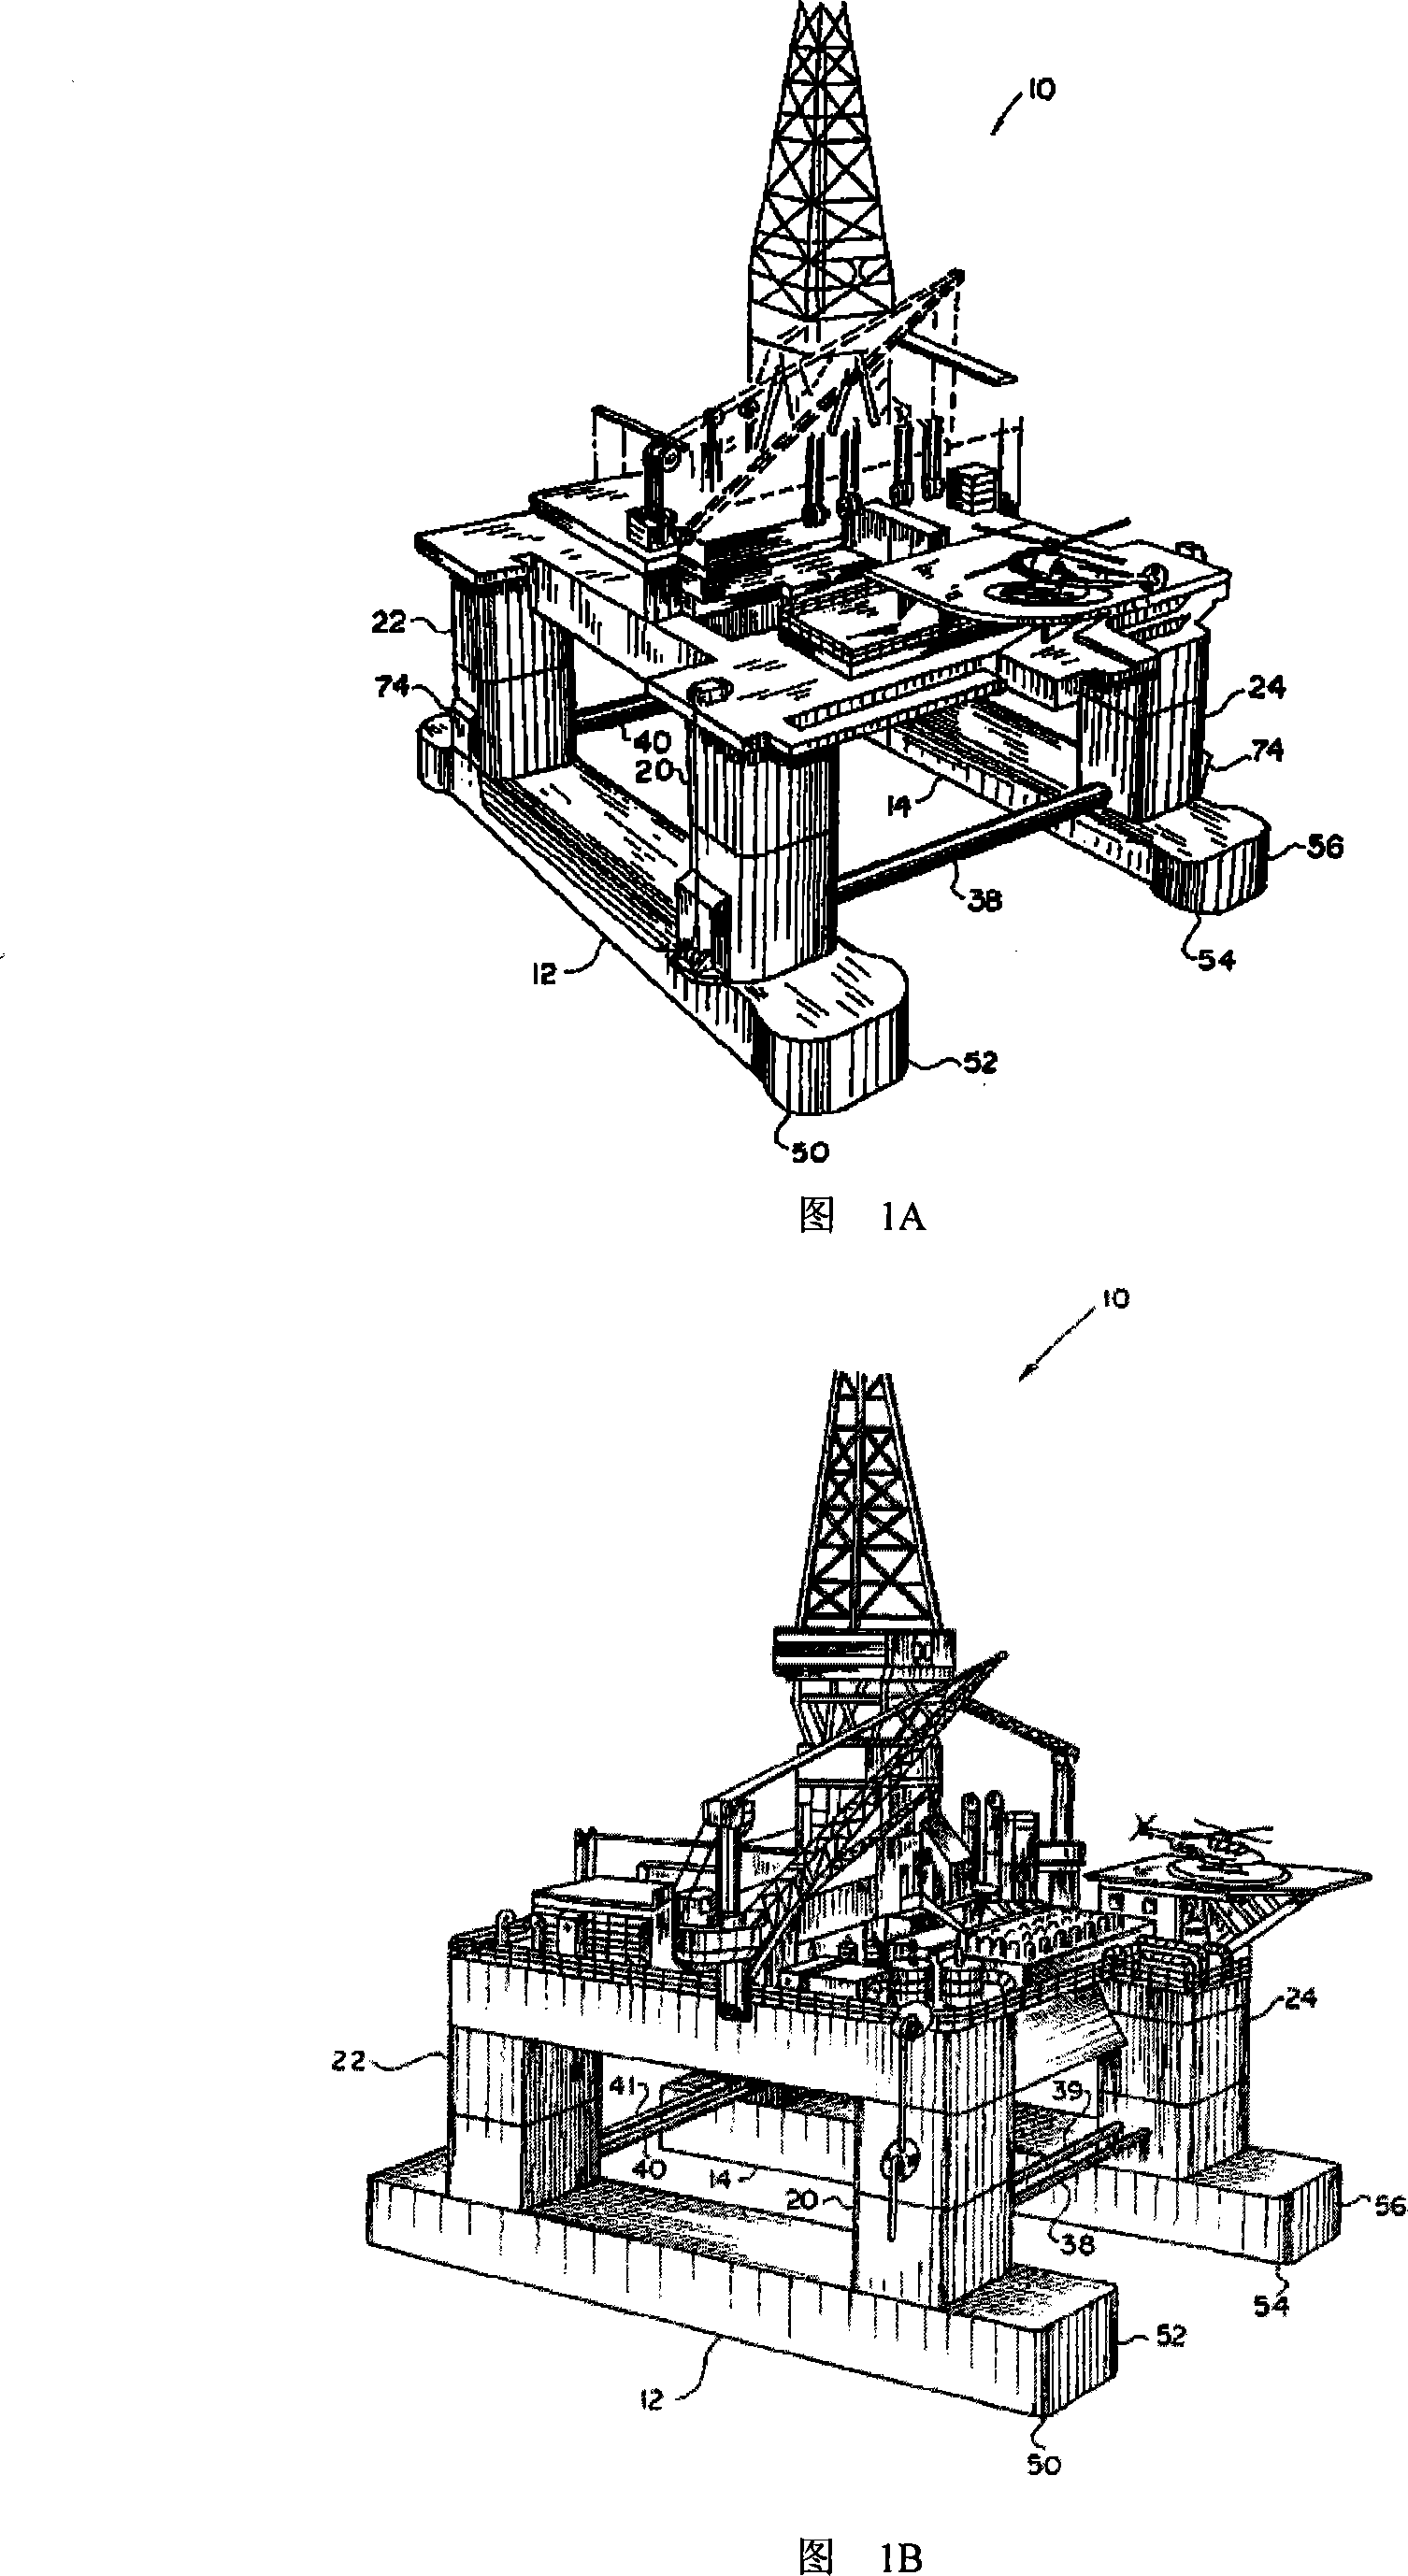 Semi-submersible drilling platform